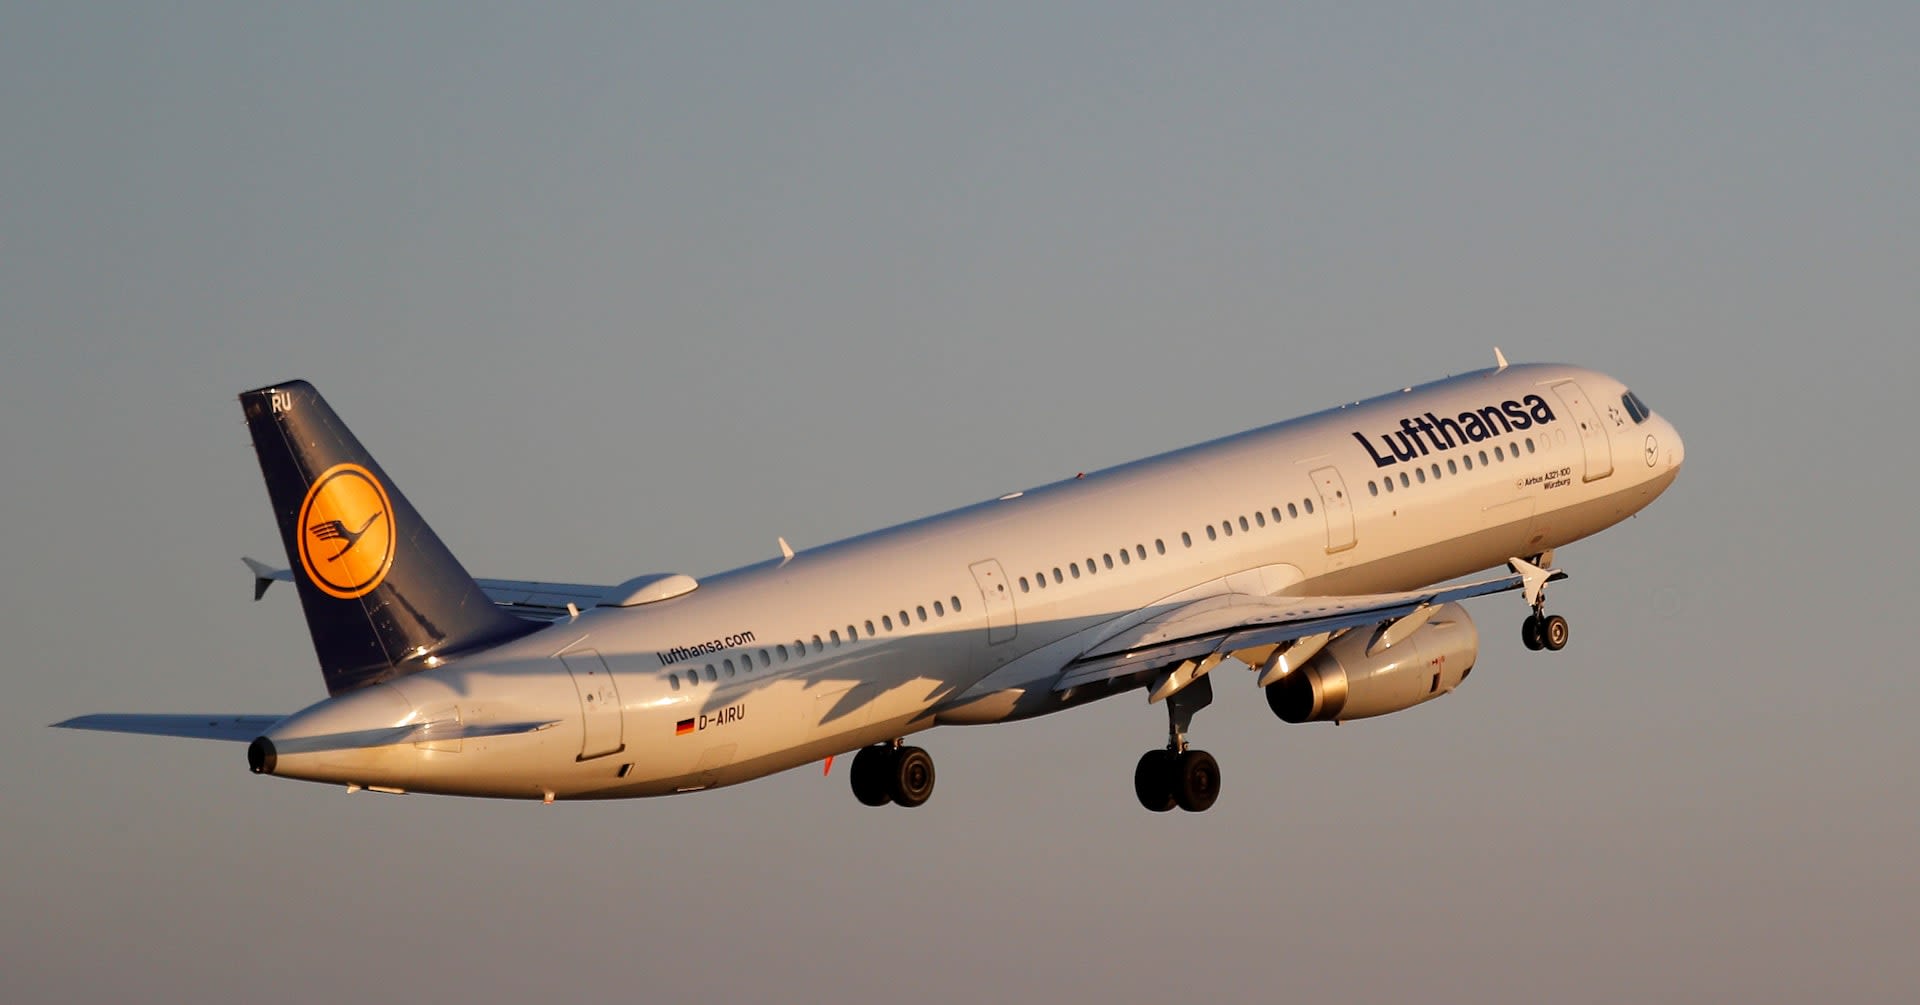 Lufthansa, Air France-KLM to cut costs after tough first quarter